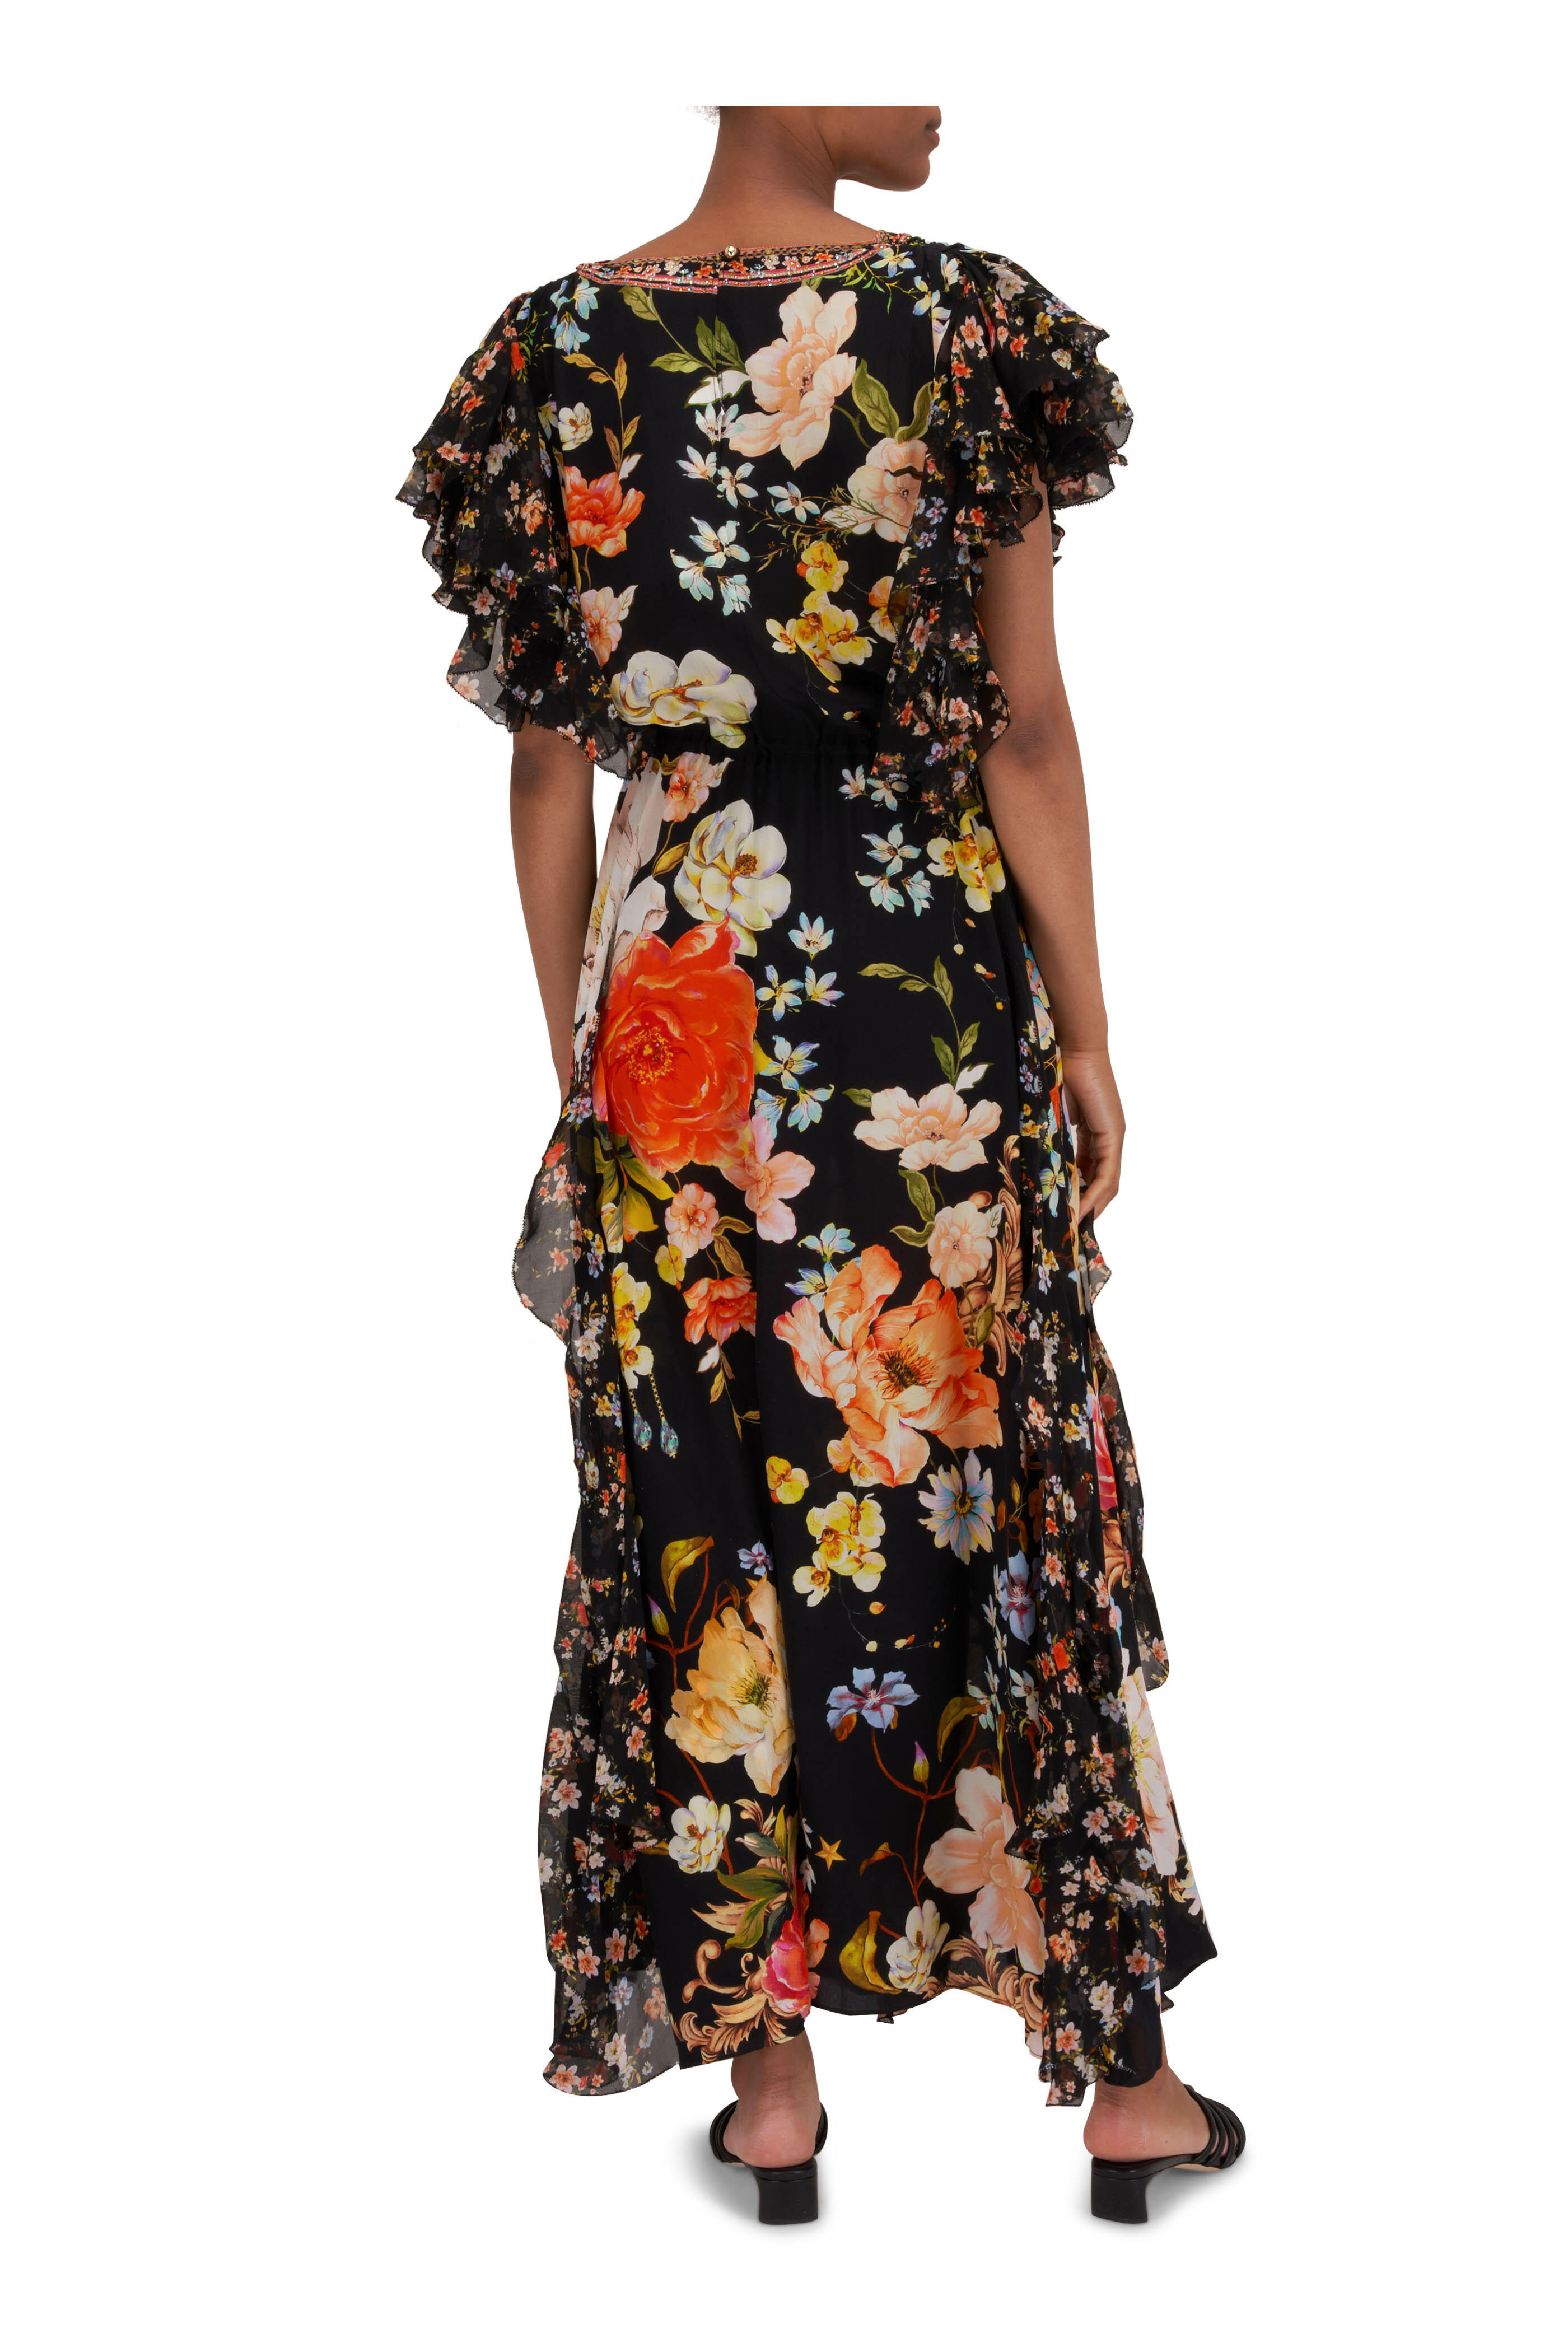 Camilla - Secret History Black Floral Allover Ruffle Dress